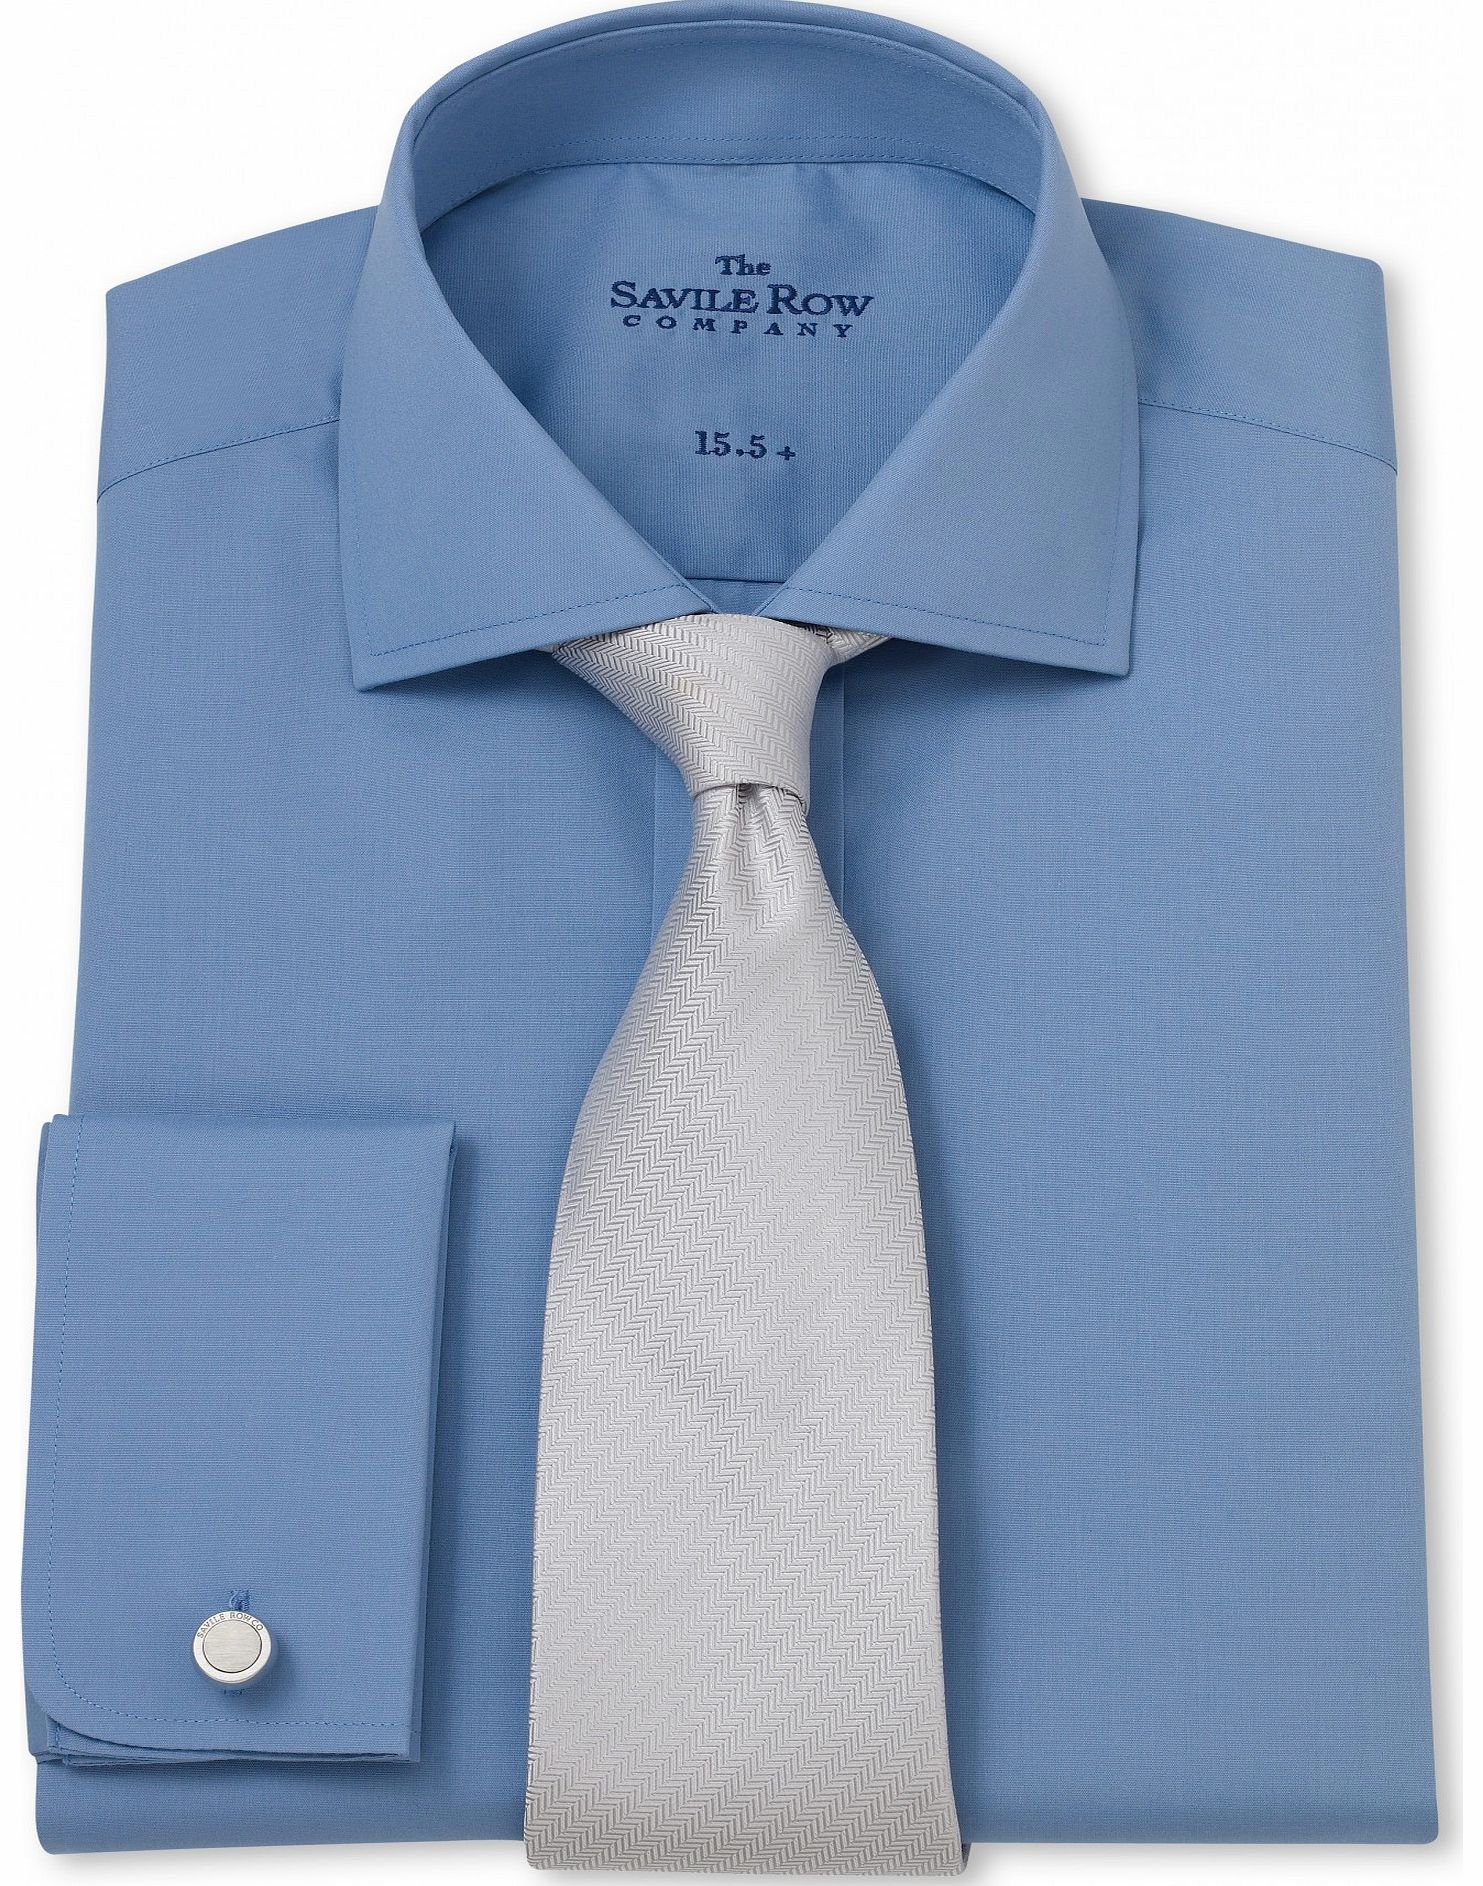 Savile Row Company Air Force Blue Poplin Slim Fit Shirt 17``